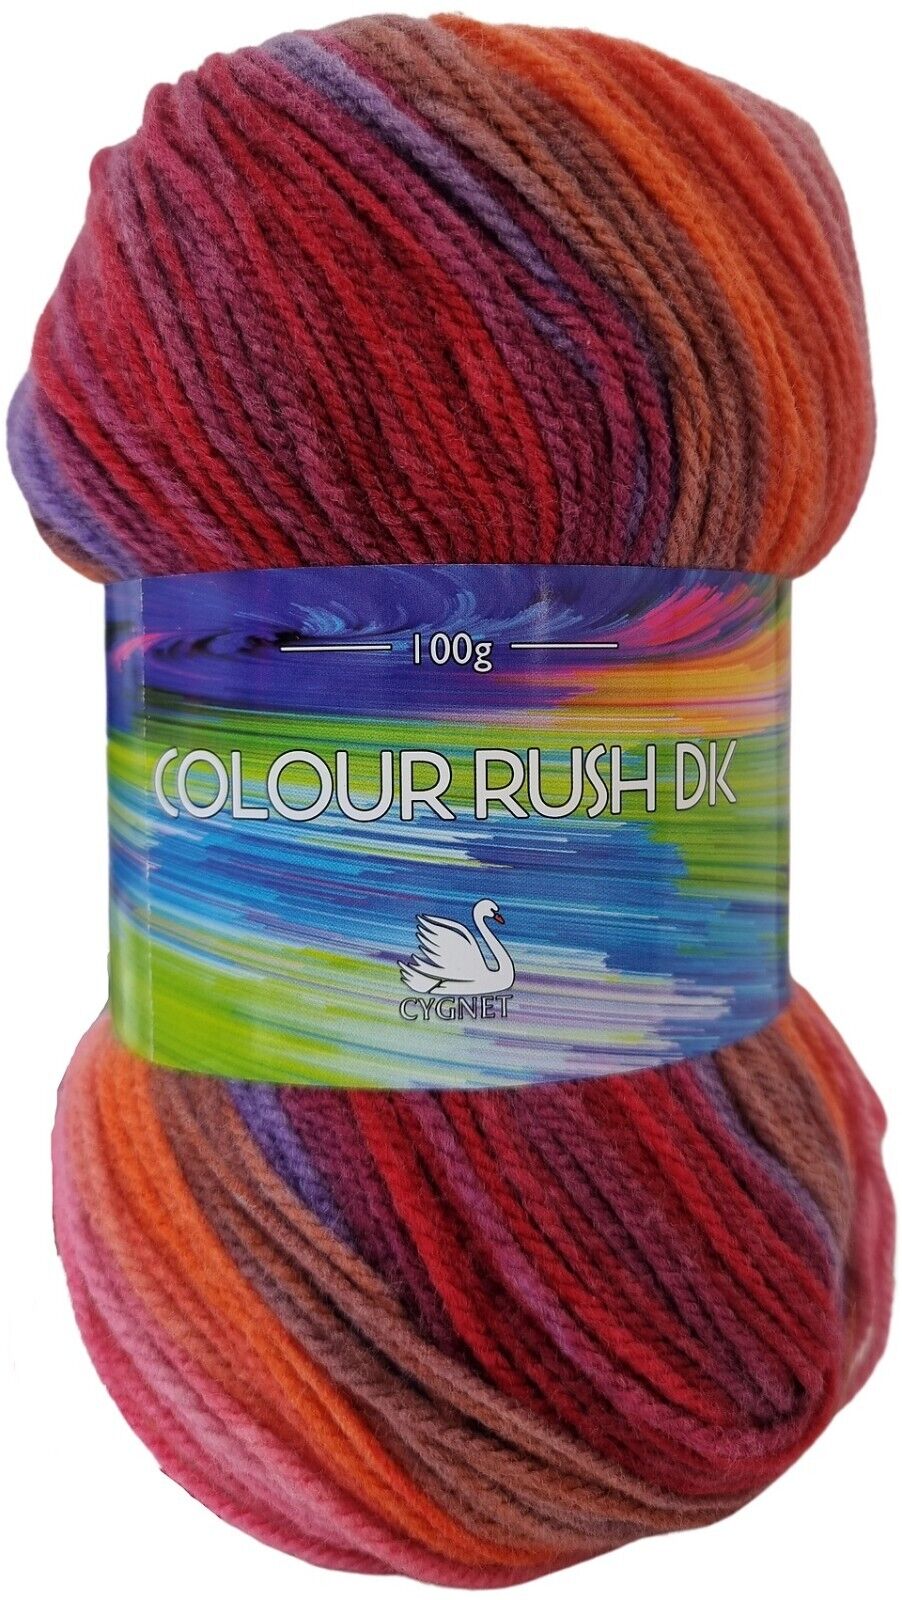 Cygnet COLOUR RUSH DK Knitting Yarn / Wool - 100g Double Knit Ball - Watermelon